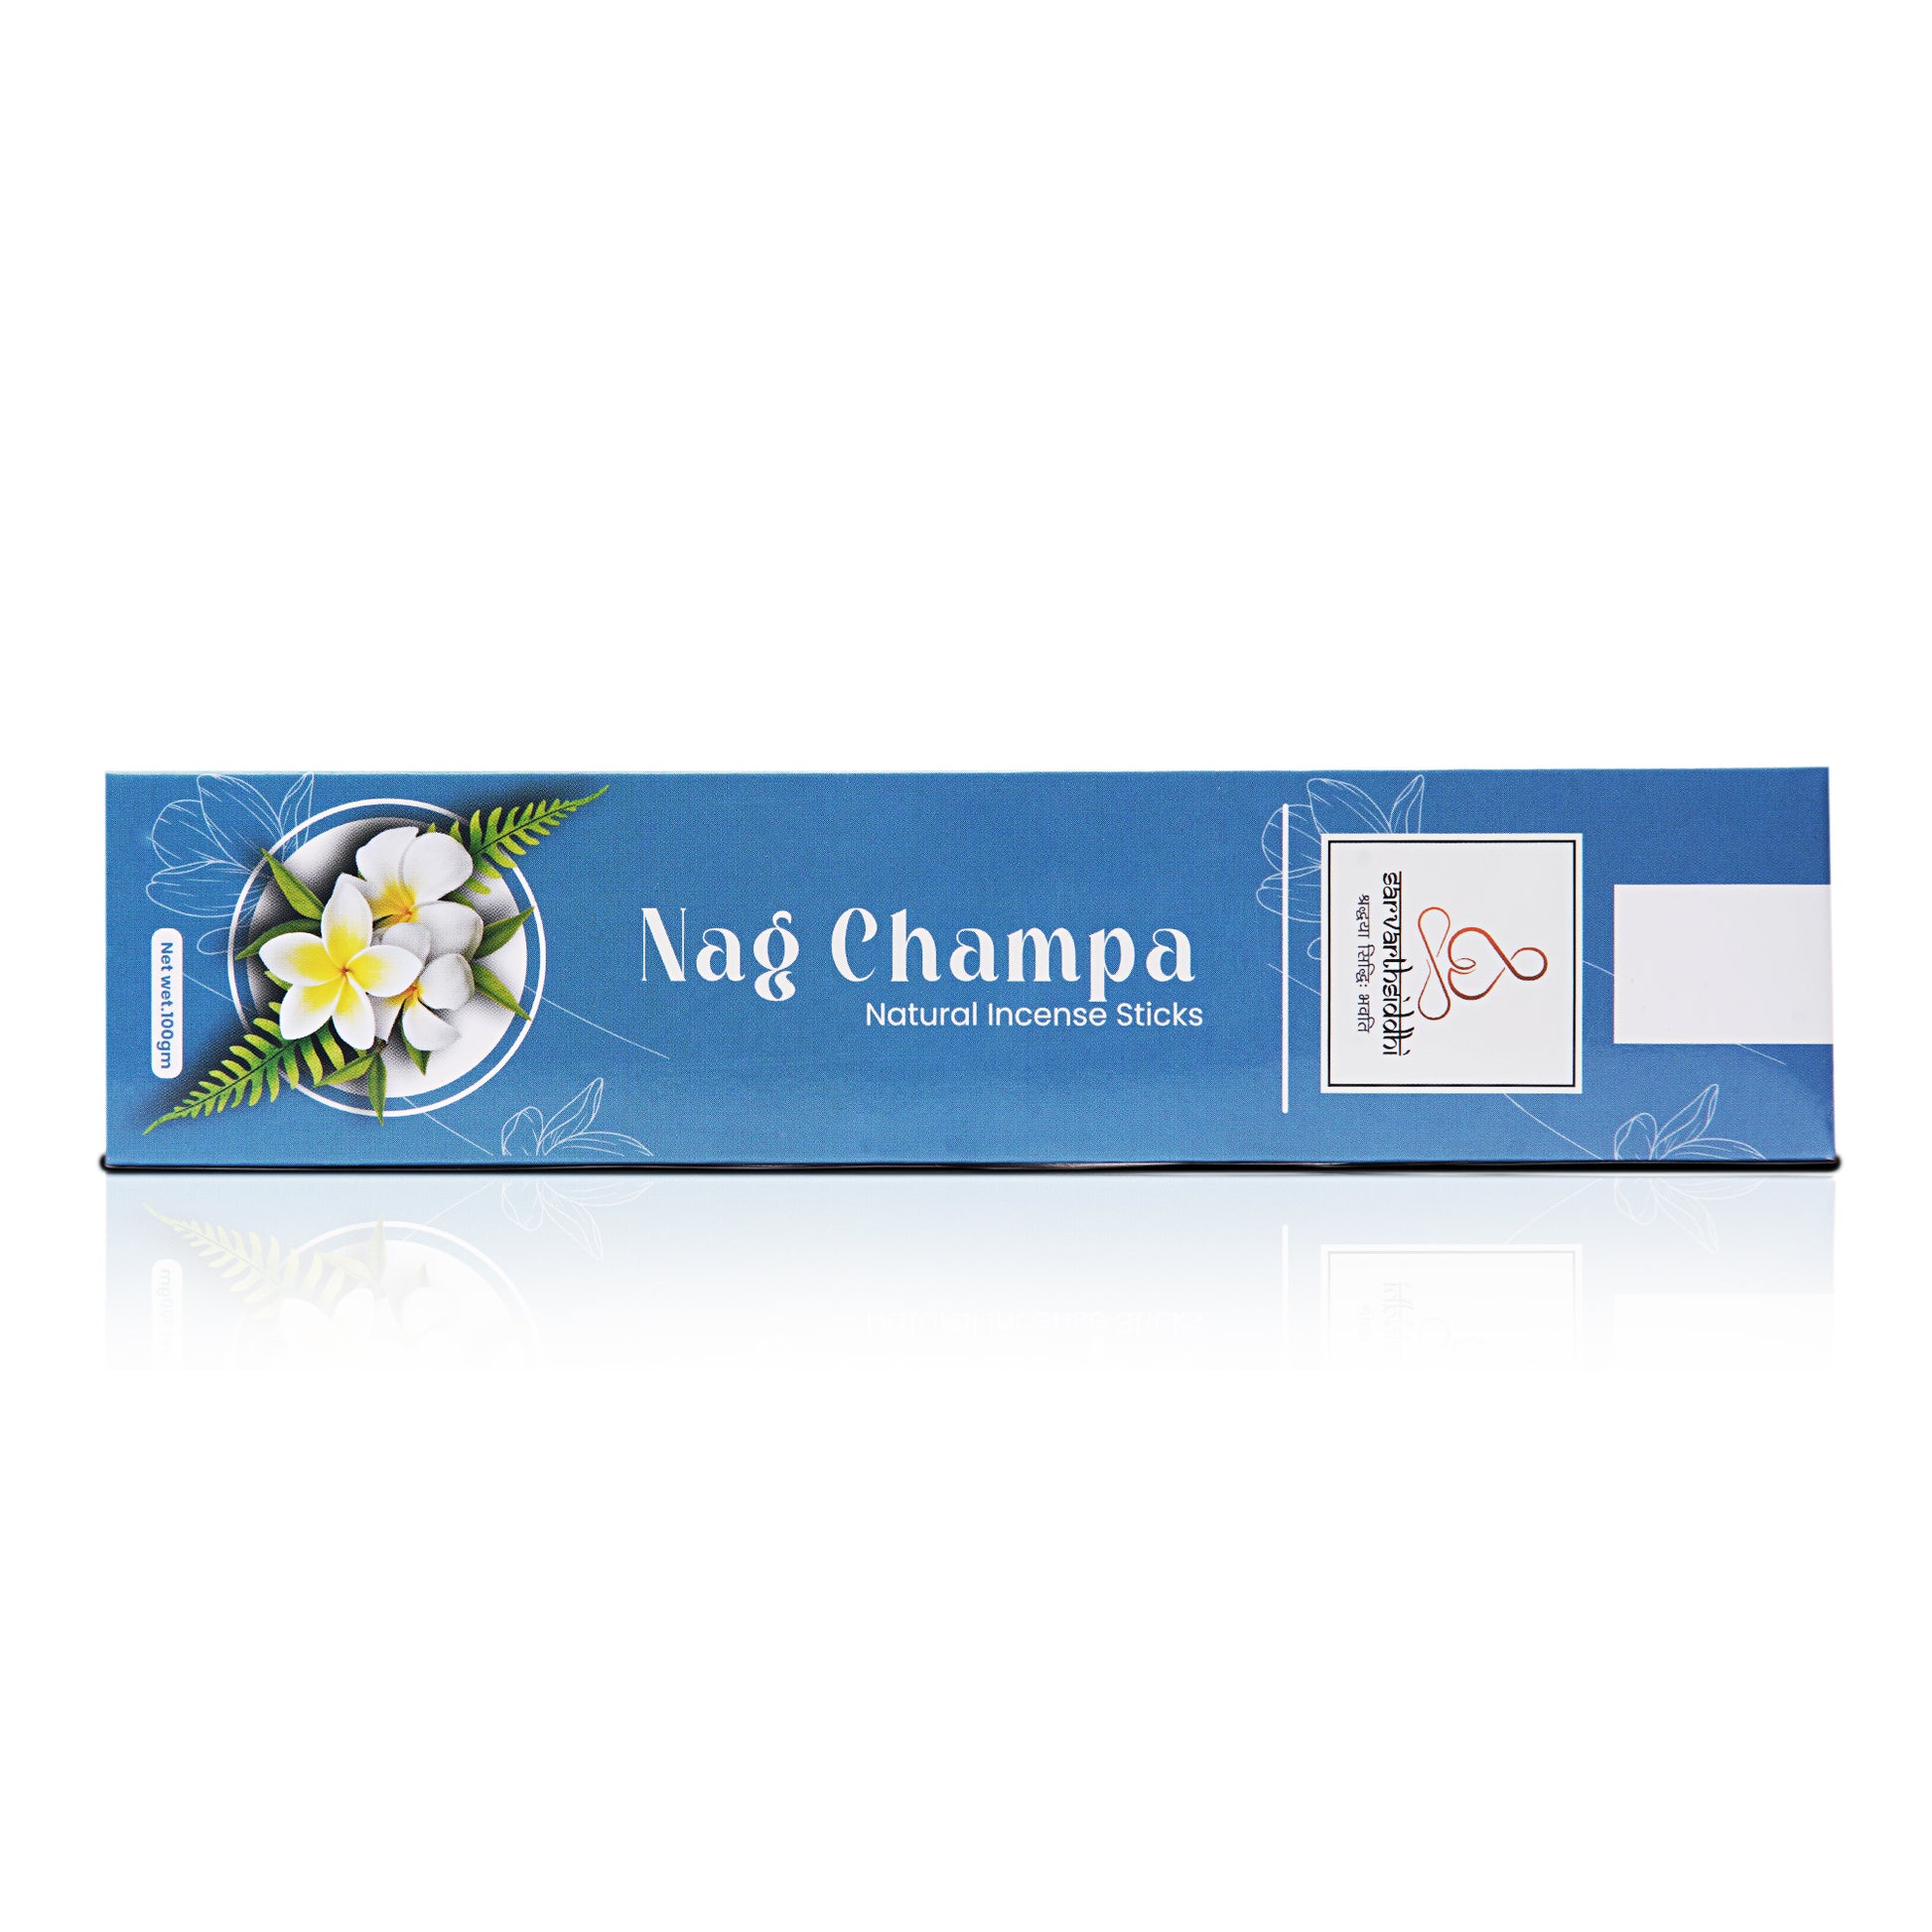 Buy Incense - Nag Champa, Accessories